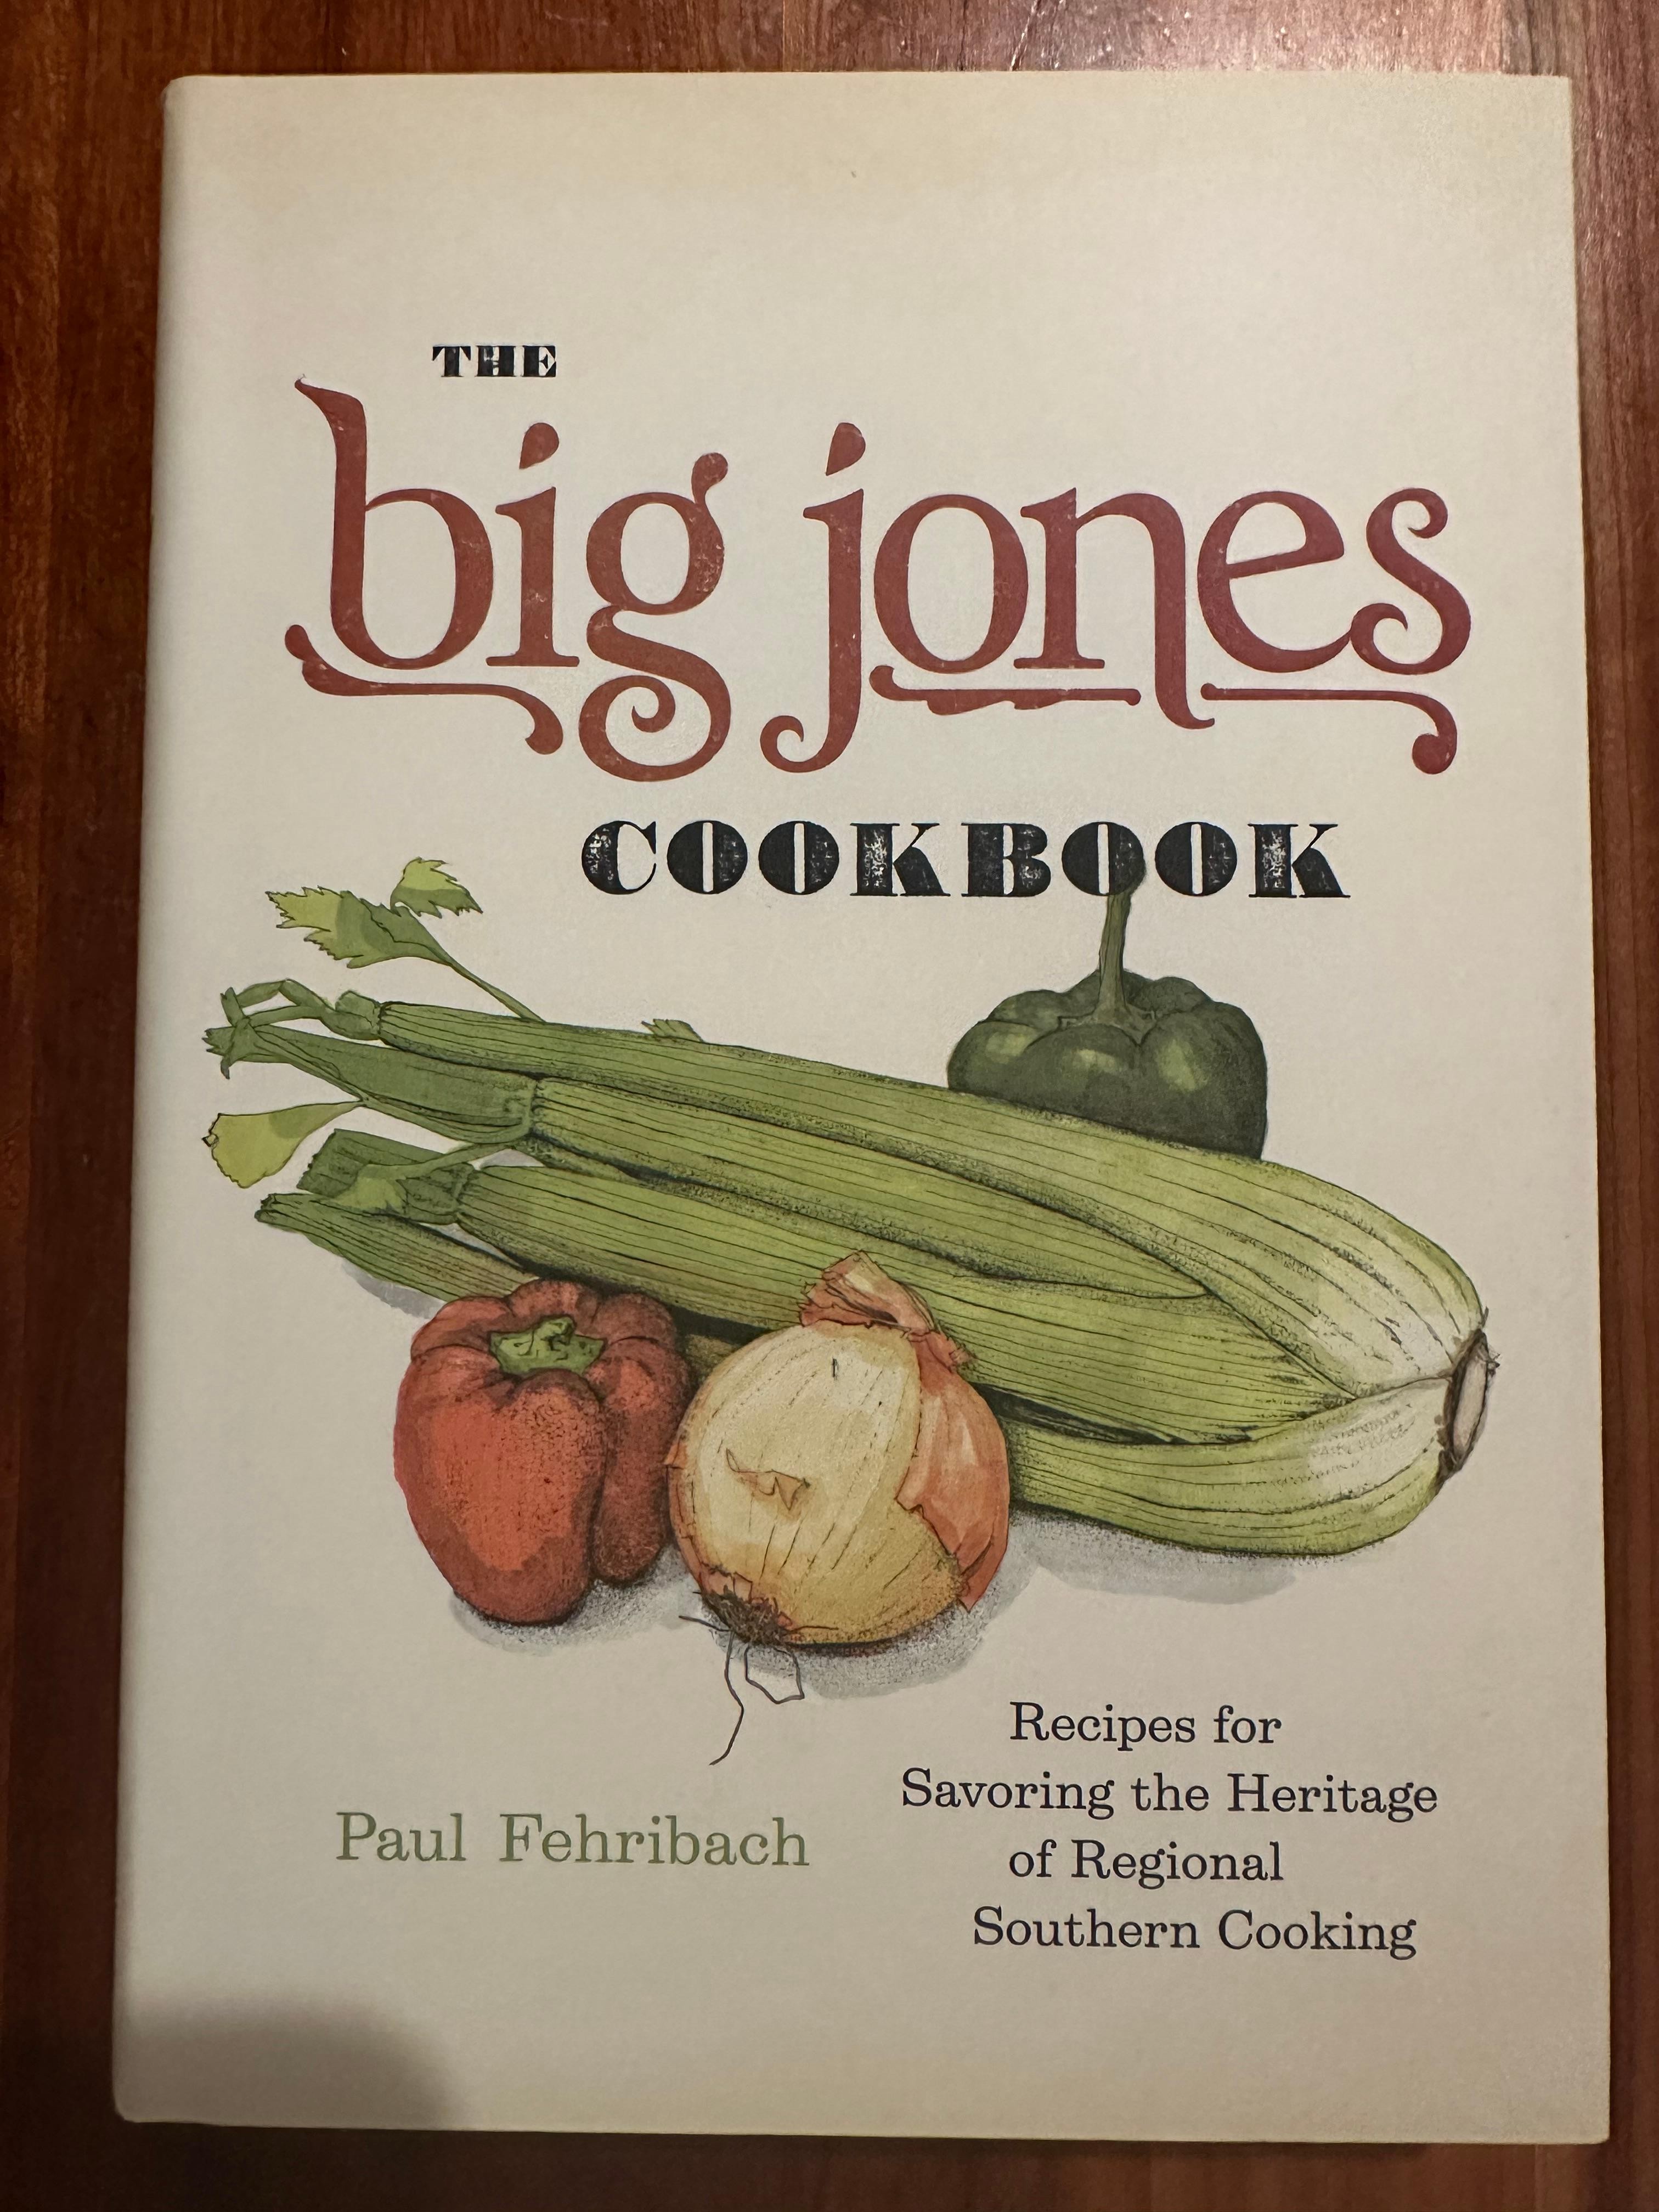 The Big Jones Cookbook (paperback)